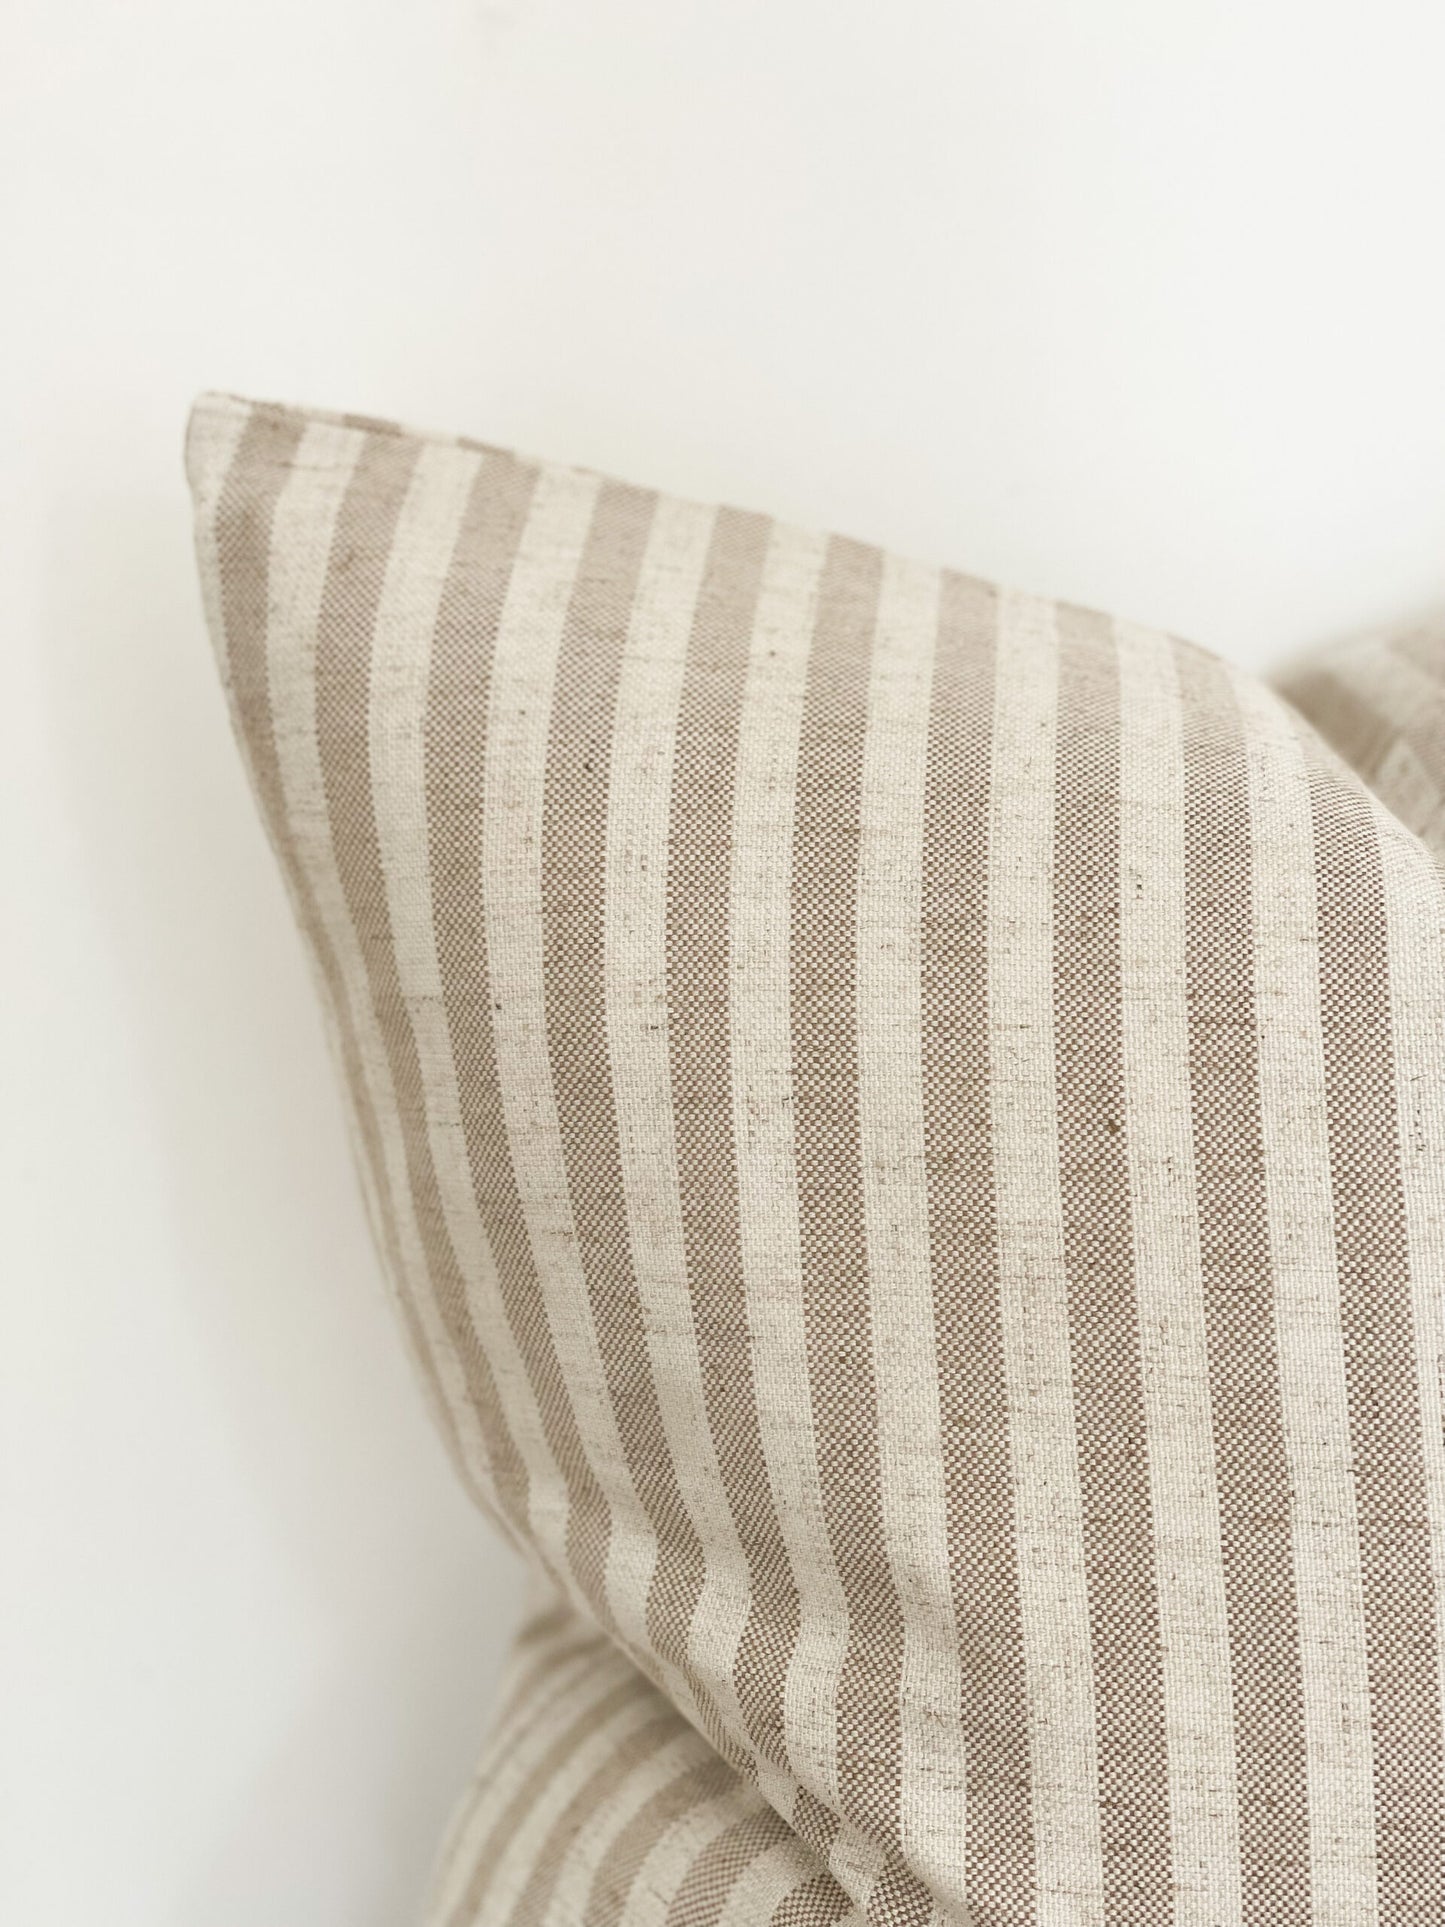 Sienna Cushion Cover with Beige Stripes (45x45cm)